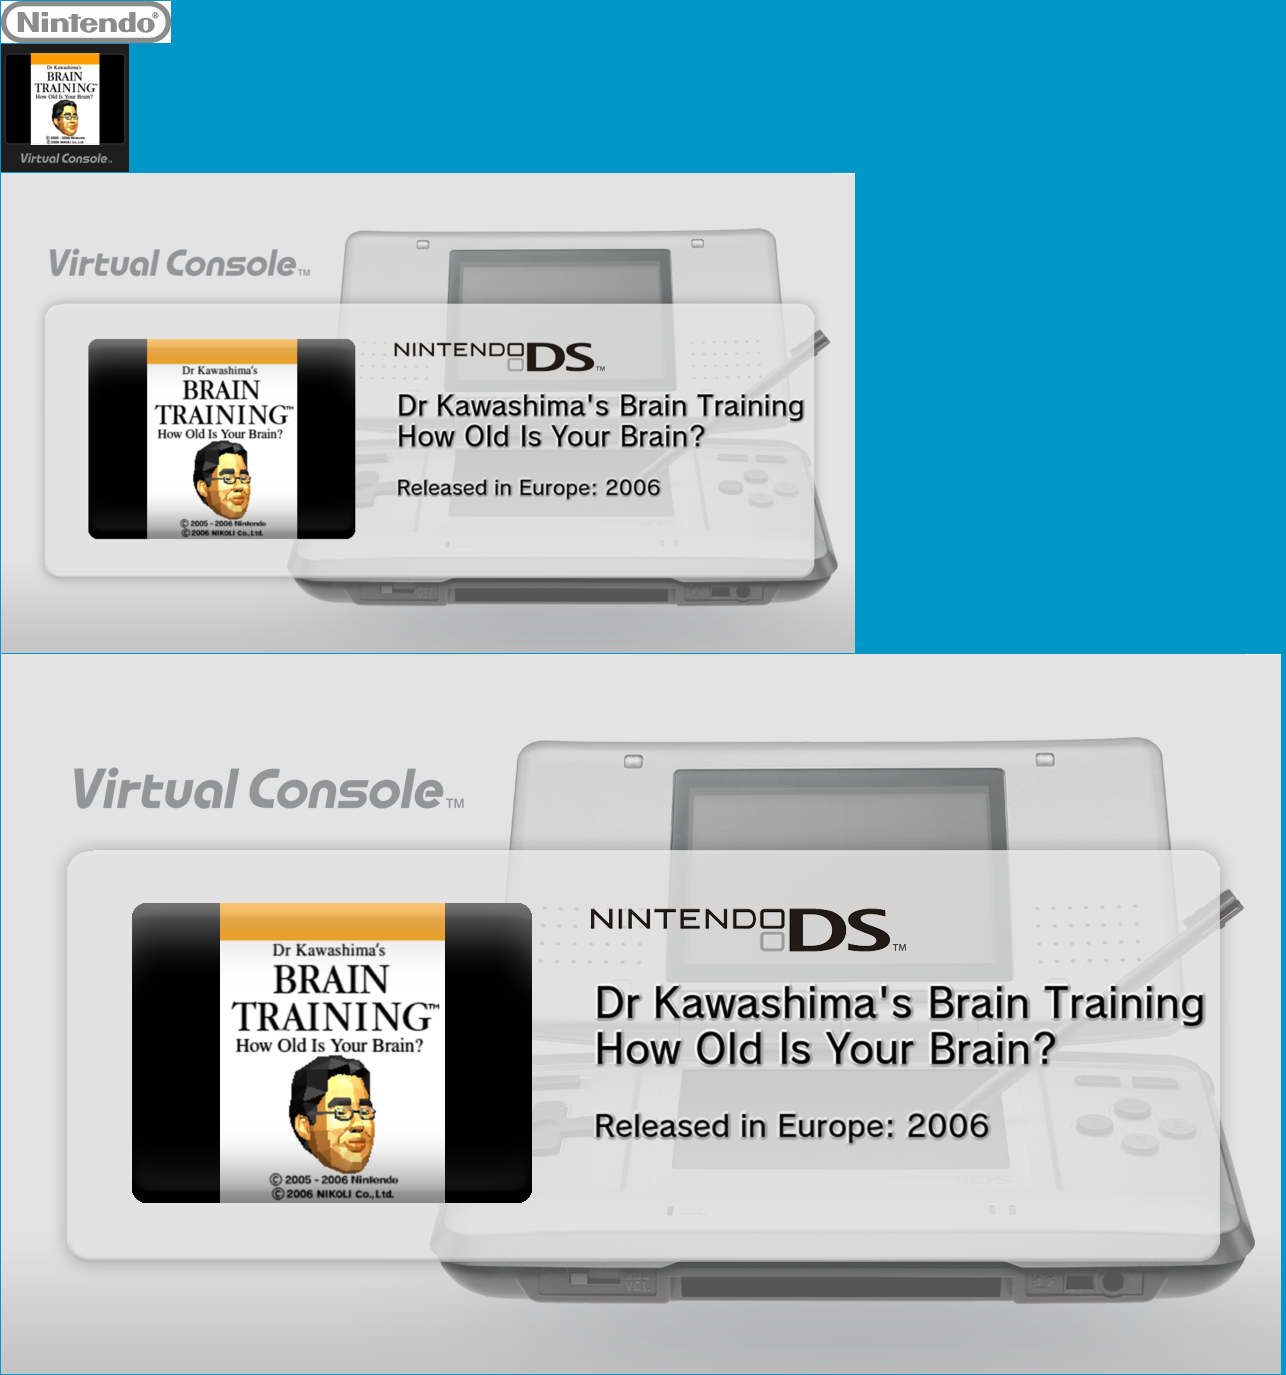 Dr. Kawashima's Brain Training How Old Is Your Brain?